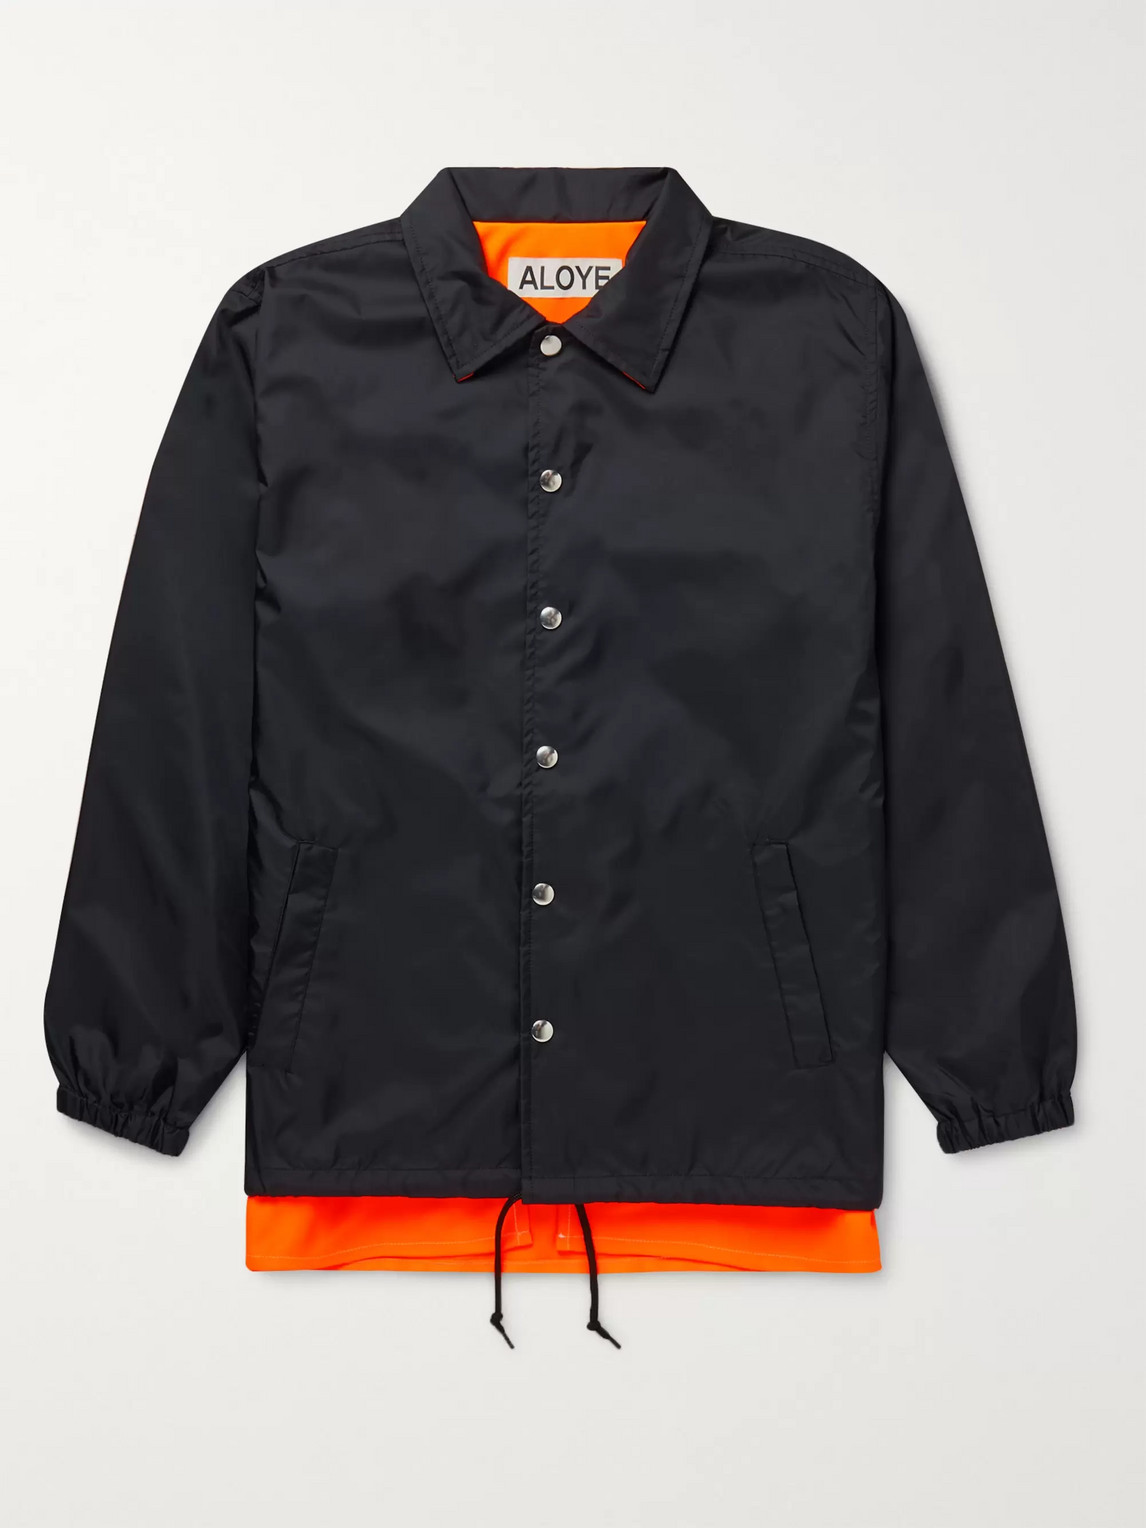 Aloye Layered Nylon And Tech-jersey Jacket In Black